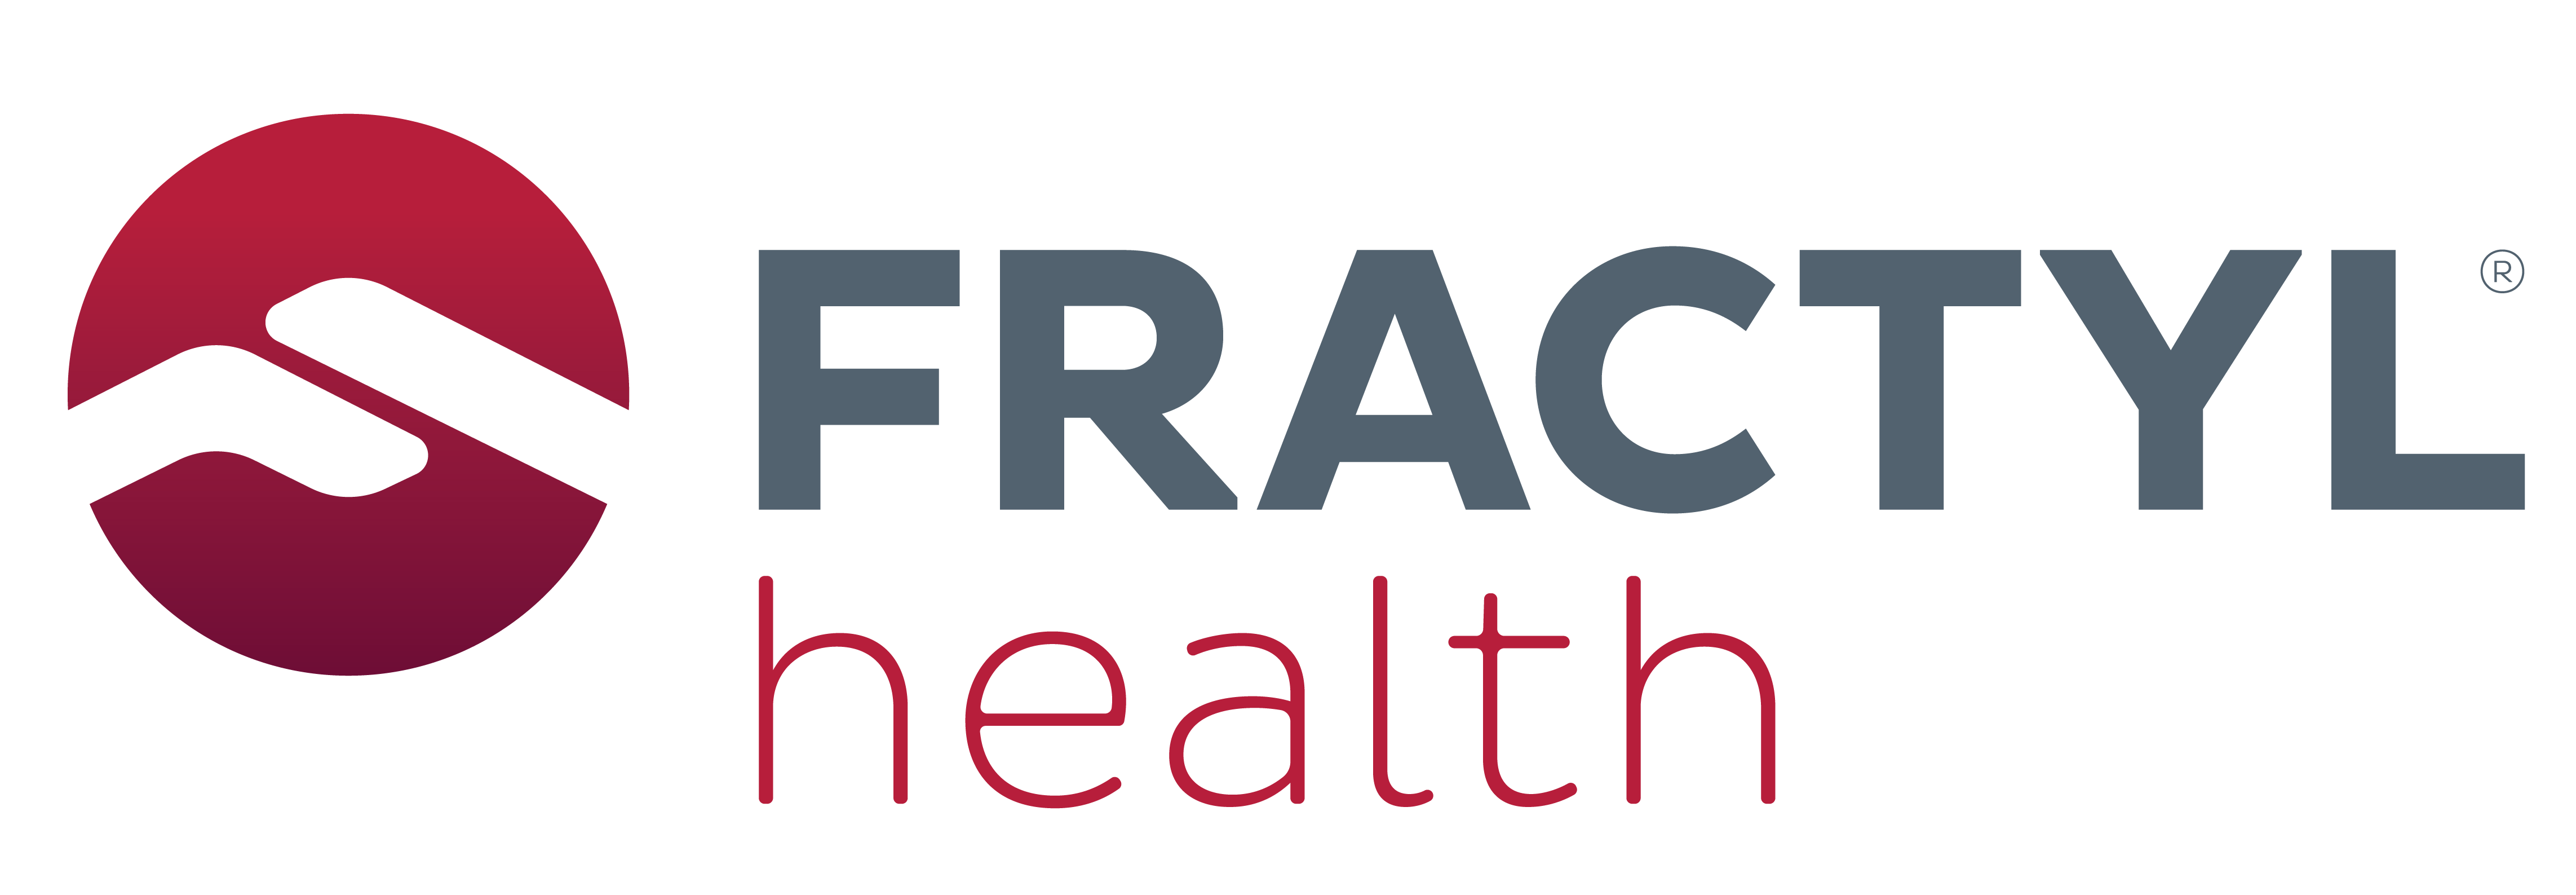 ECCO Health - Crunchbase Company Profile & Funding